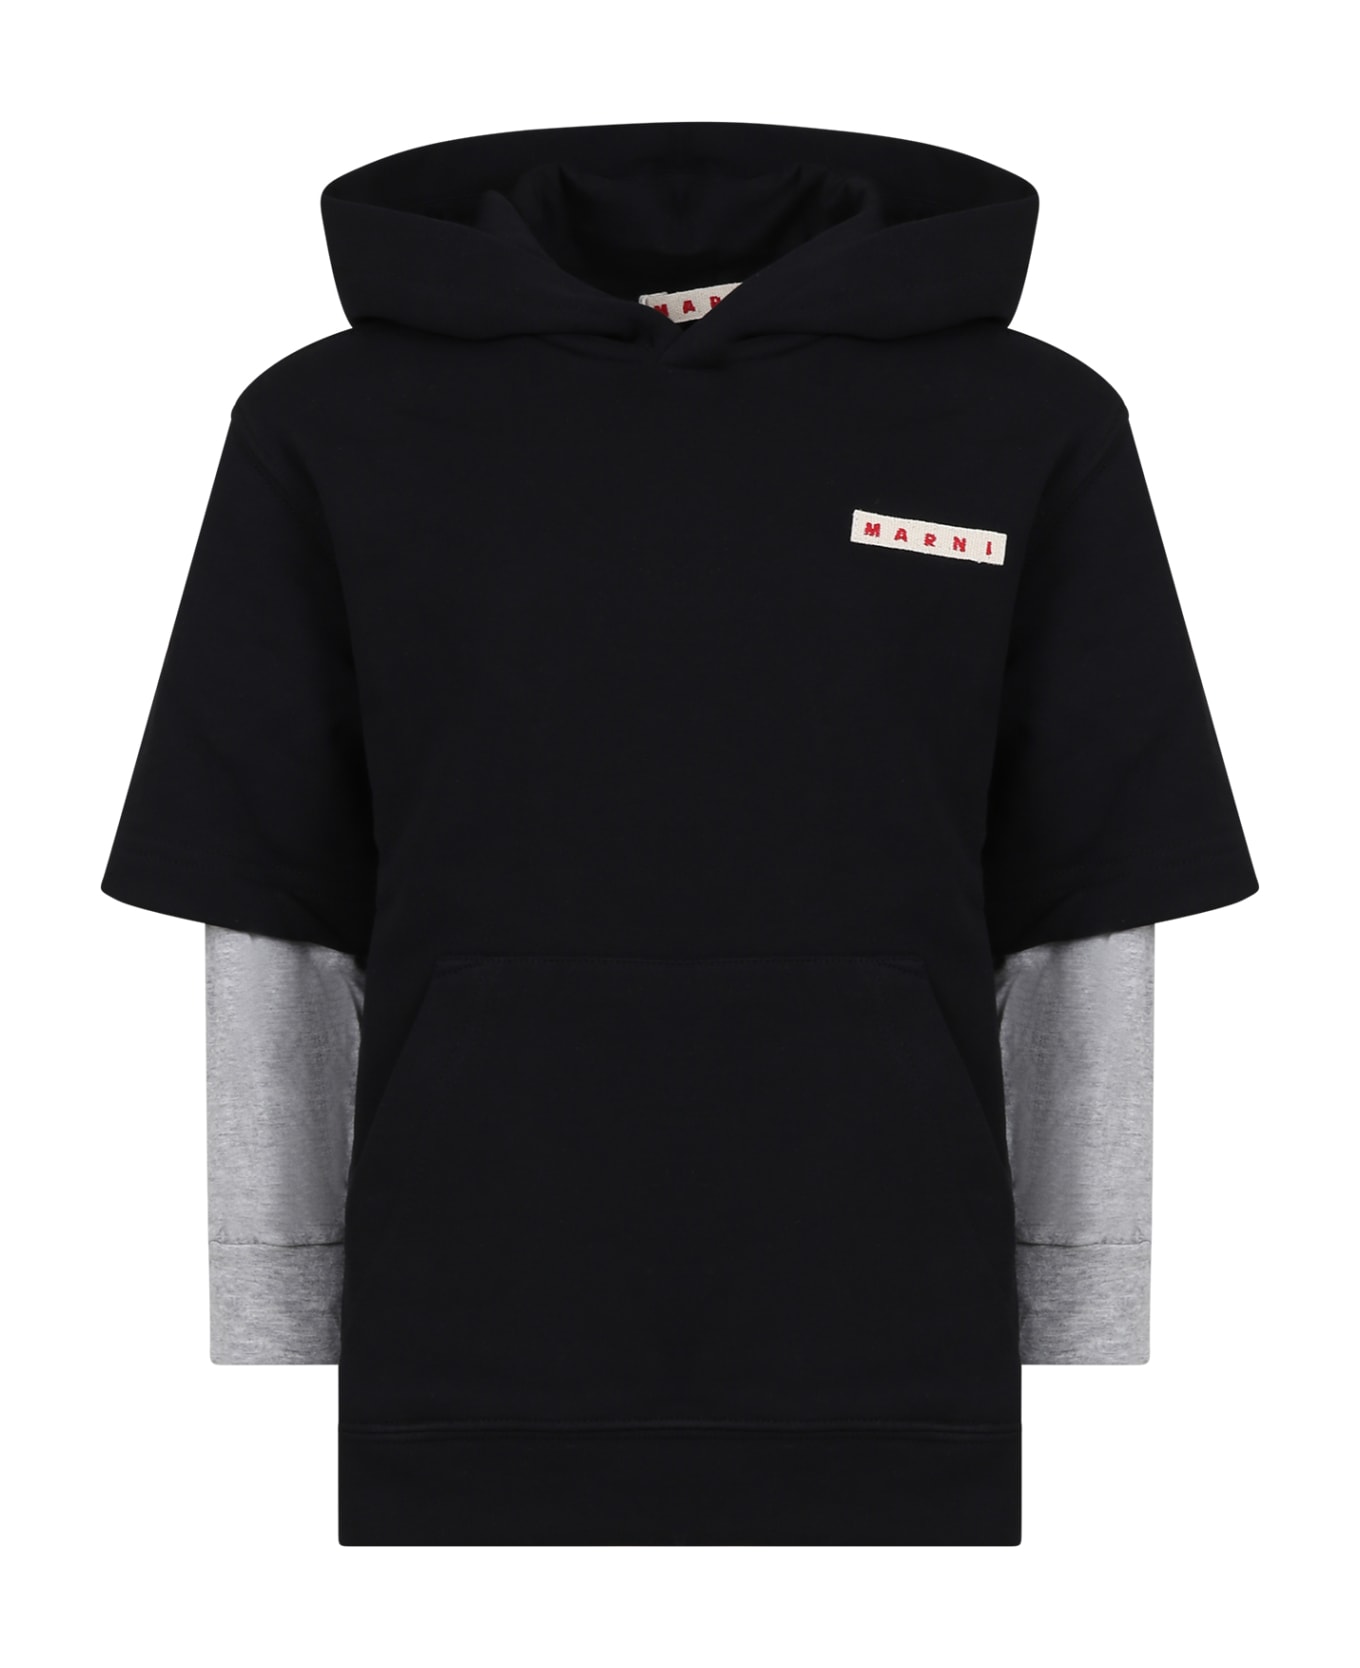 Marni Black Sweatshirt For Girl With Logo - Black